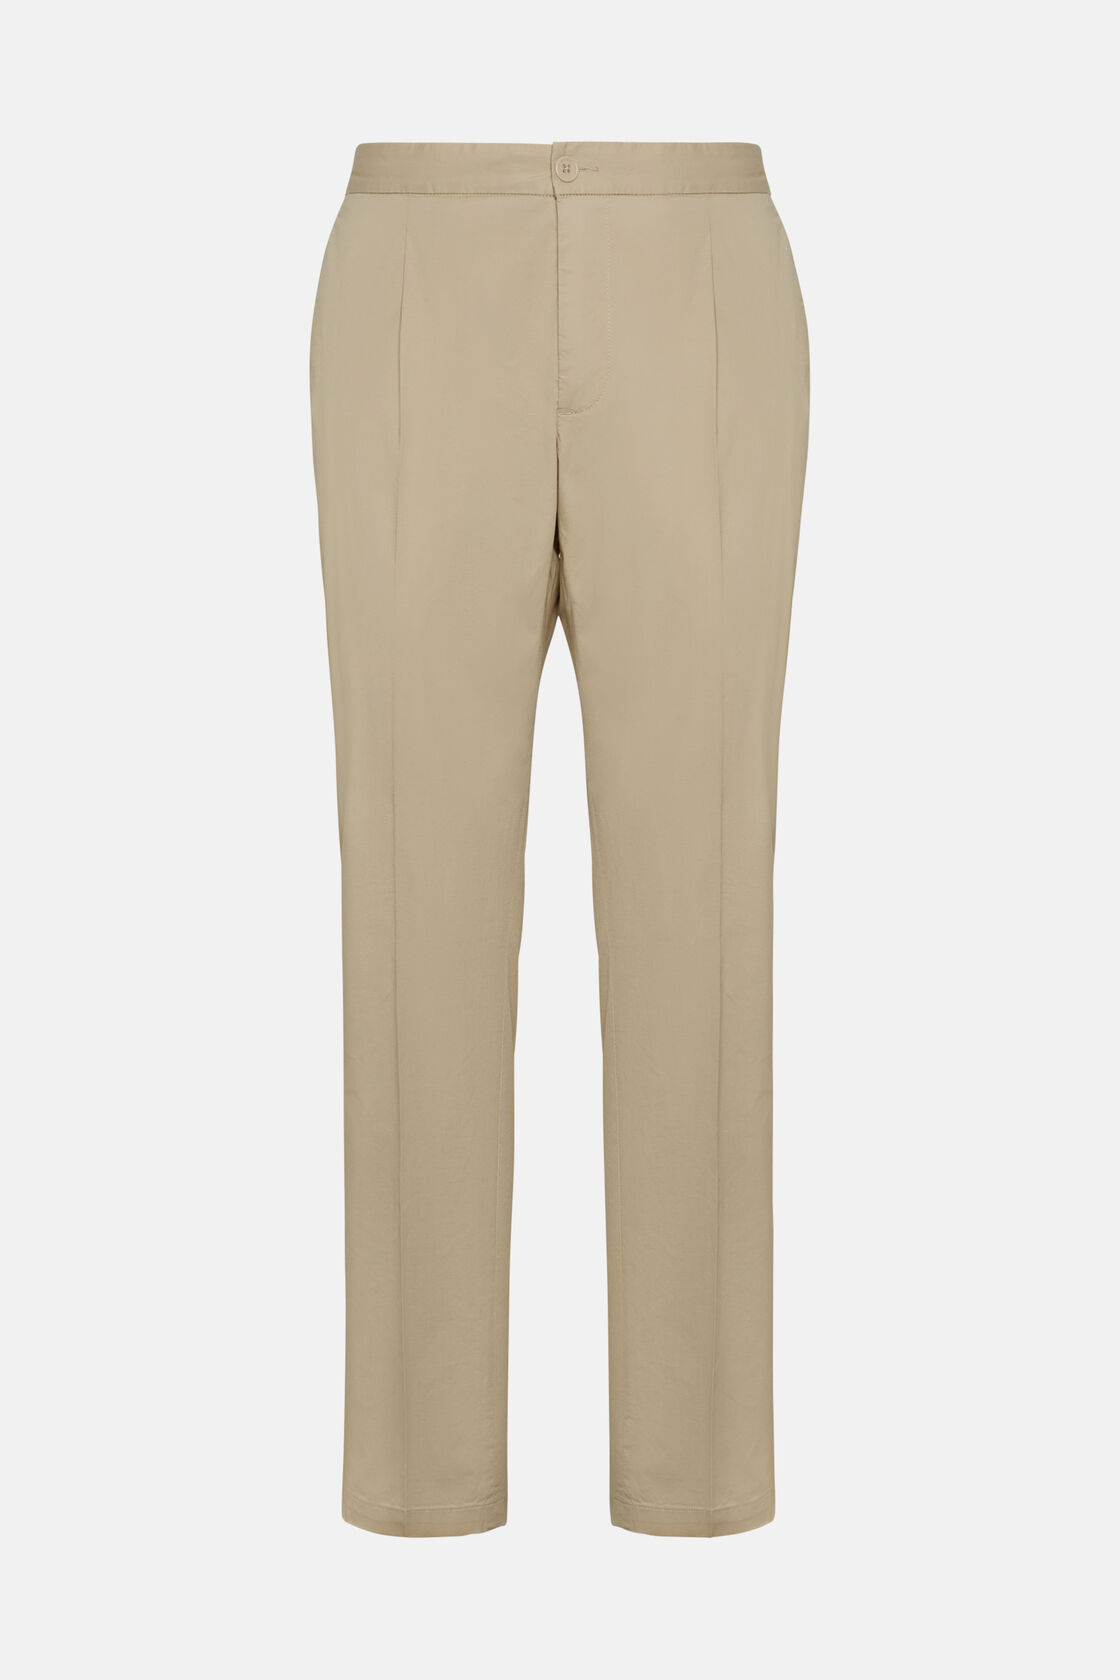 Pantalon en Coton Extensible avec Pinces, Kaki, hi-res